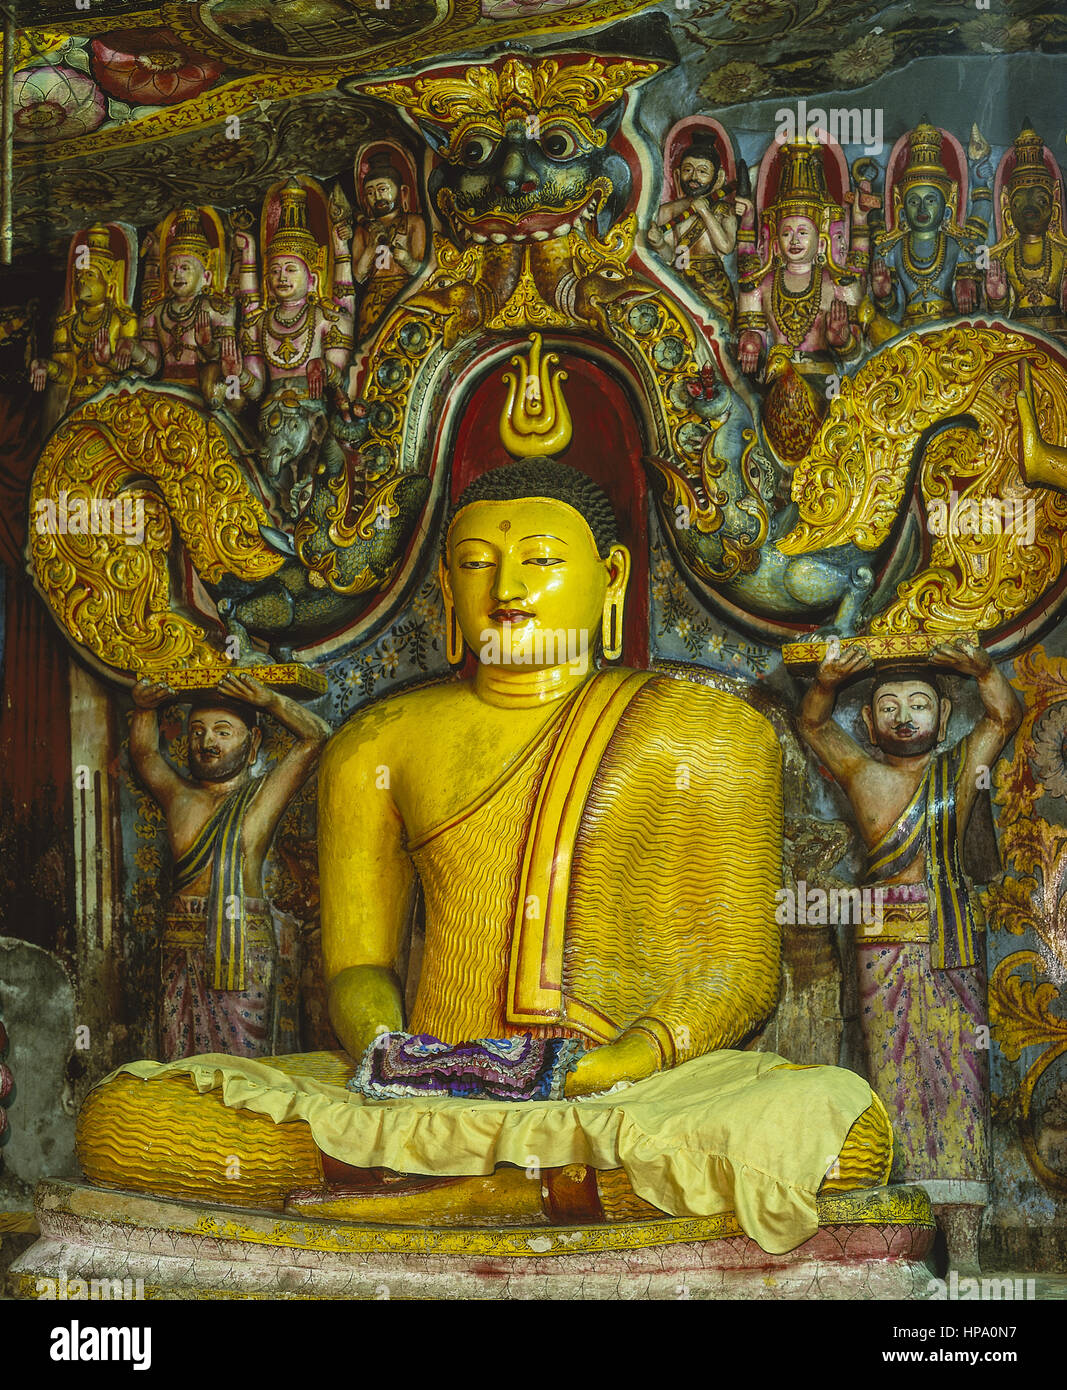 Sitzende buddhafigur, felsentempel, aluvihara, sri lanka Foto Stock